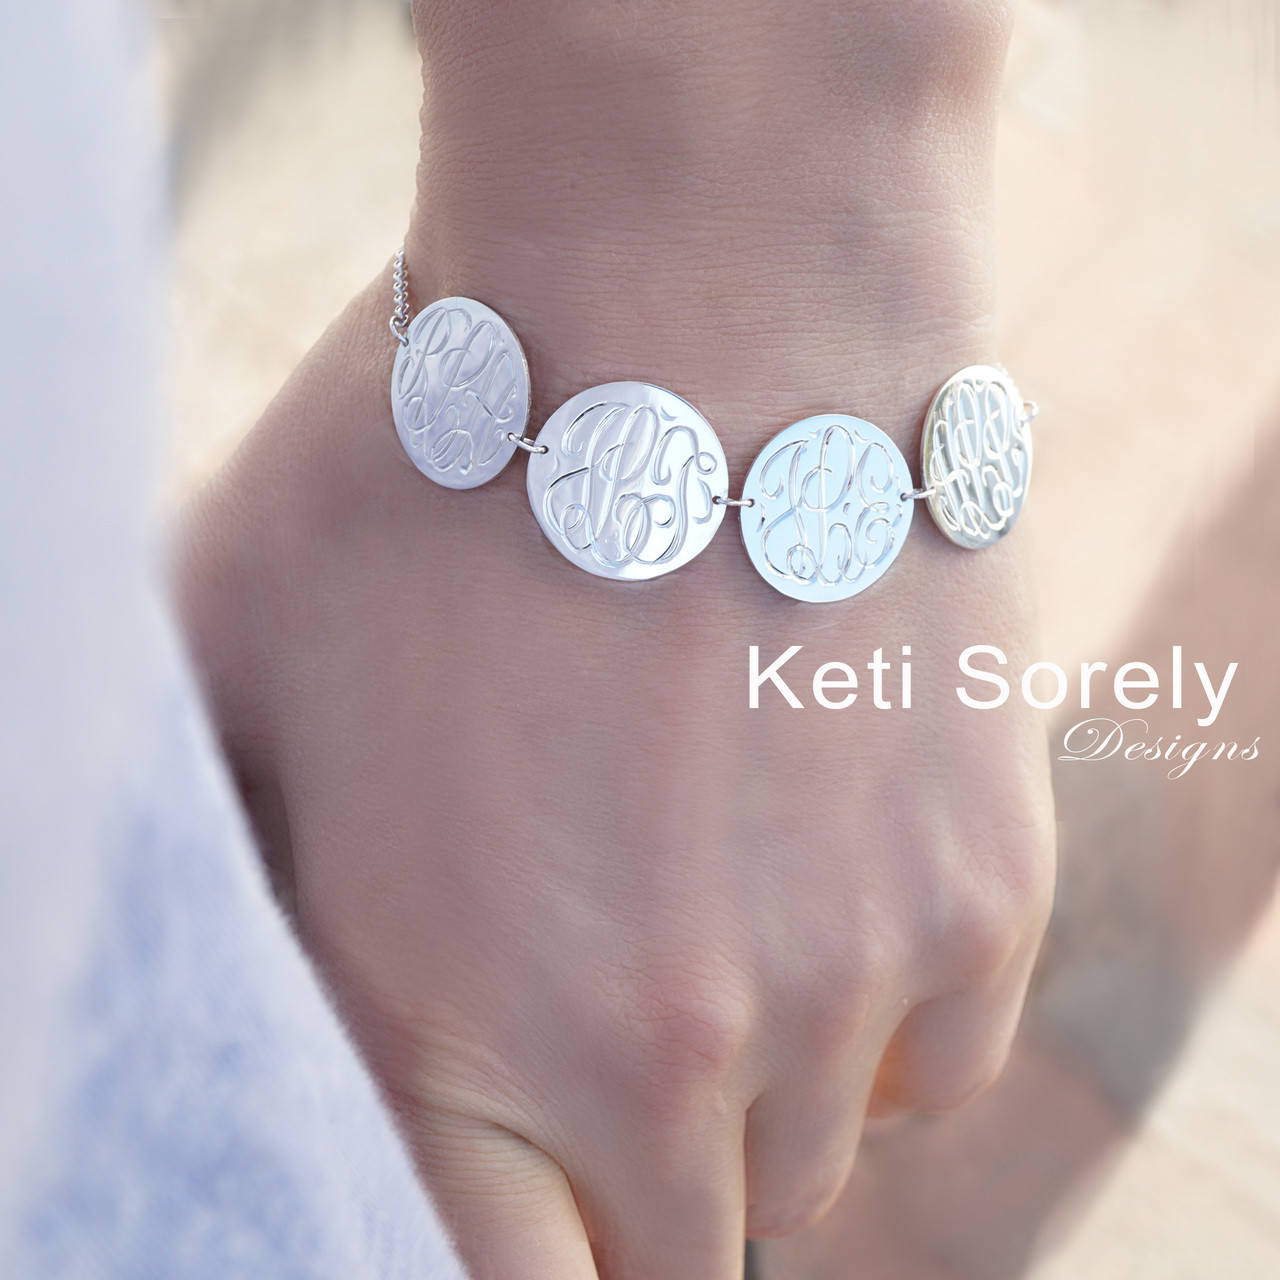 Keti Sorely Designs Monogram Bracelet